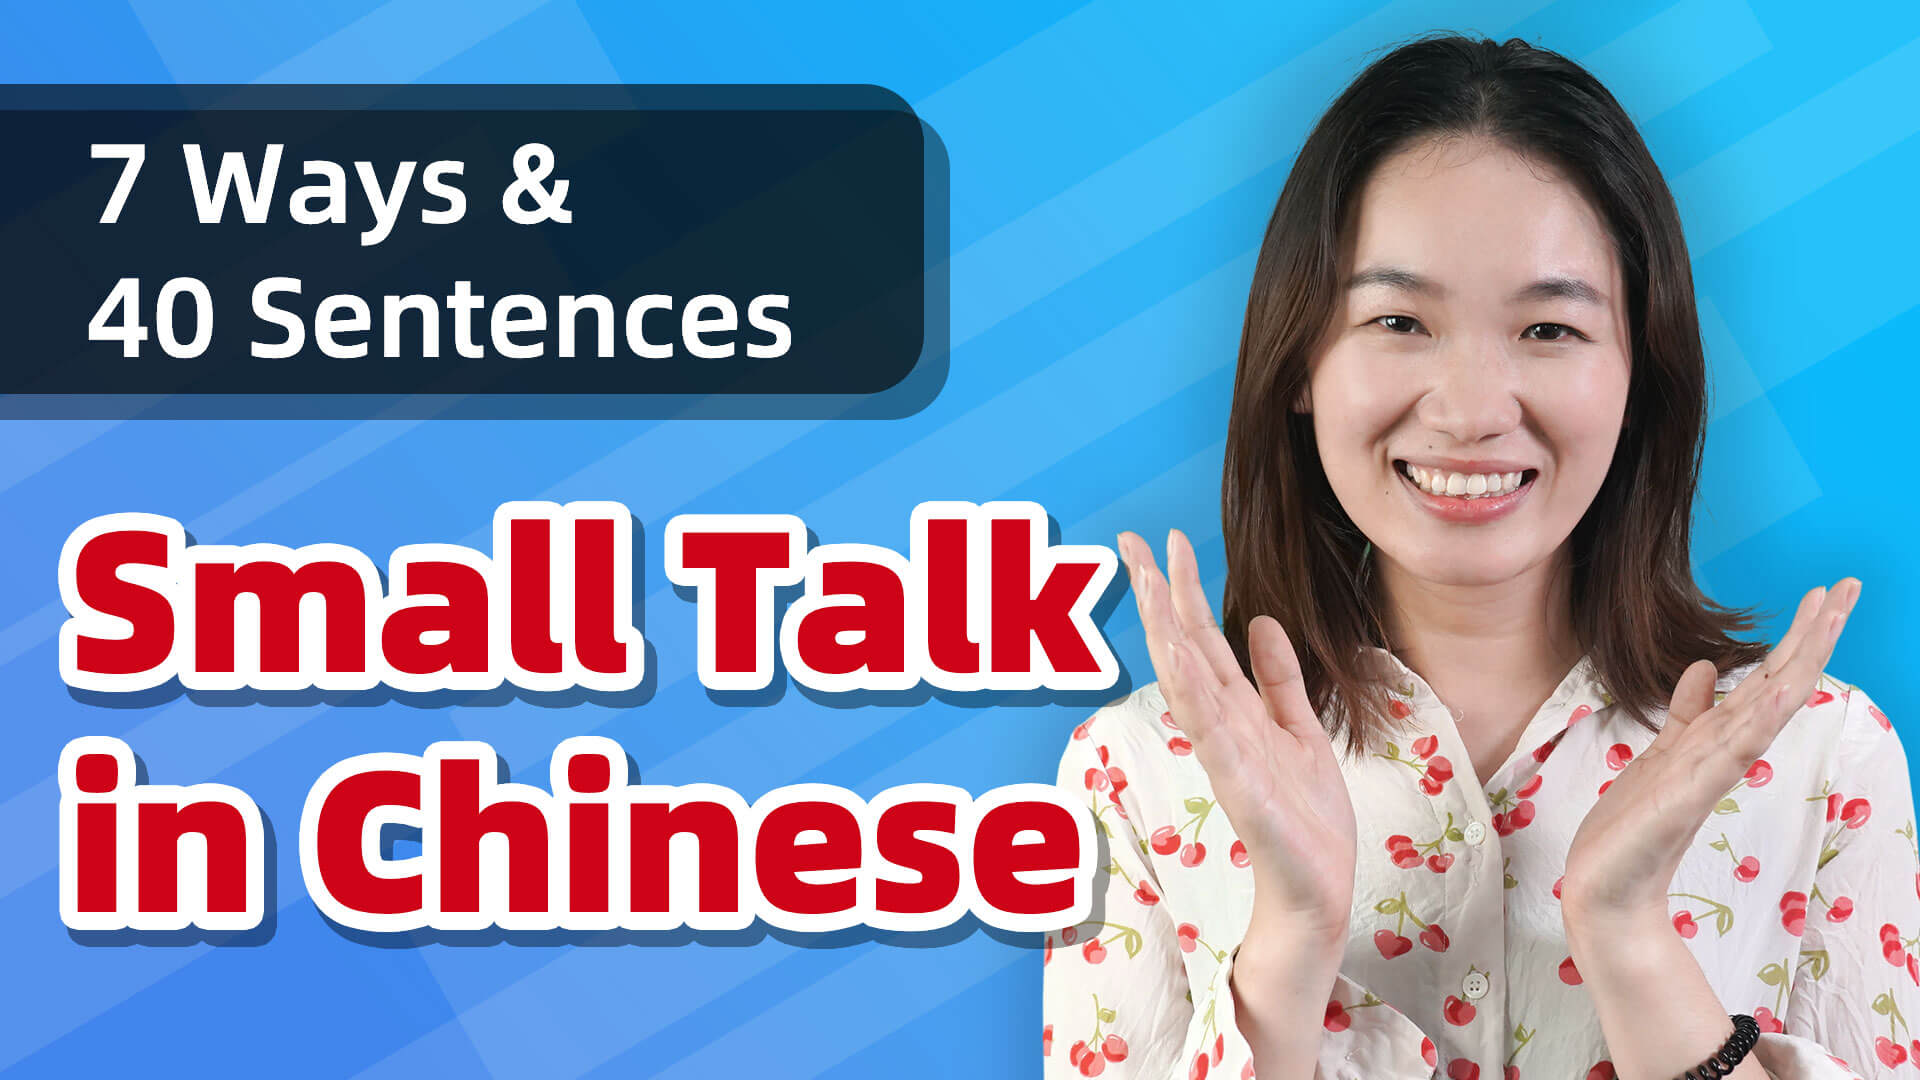 Chinese talk